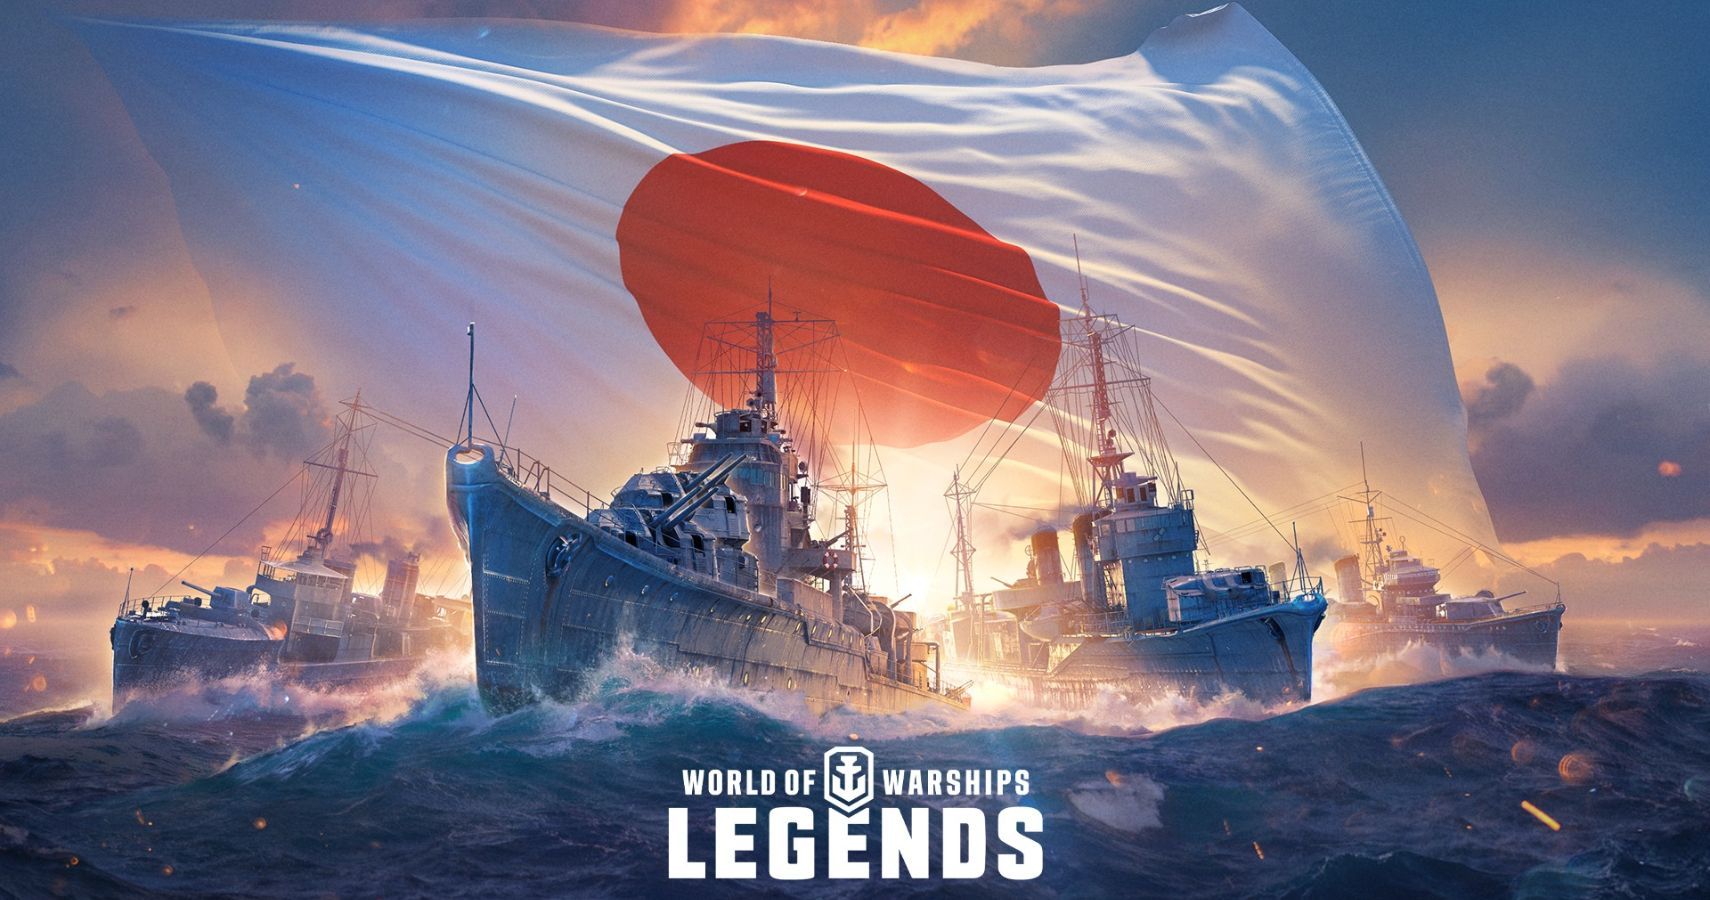 world of warships: legends next update